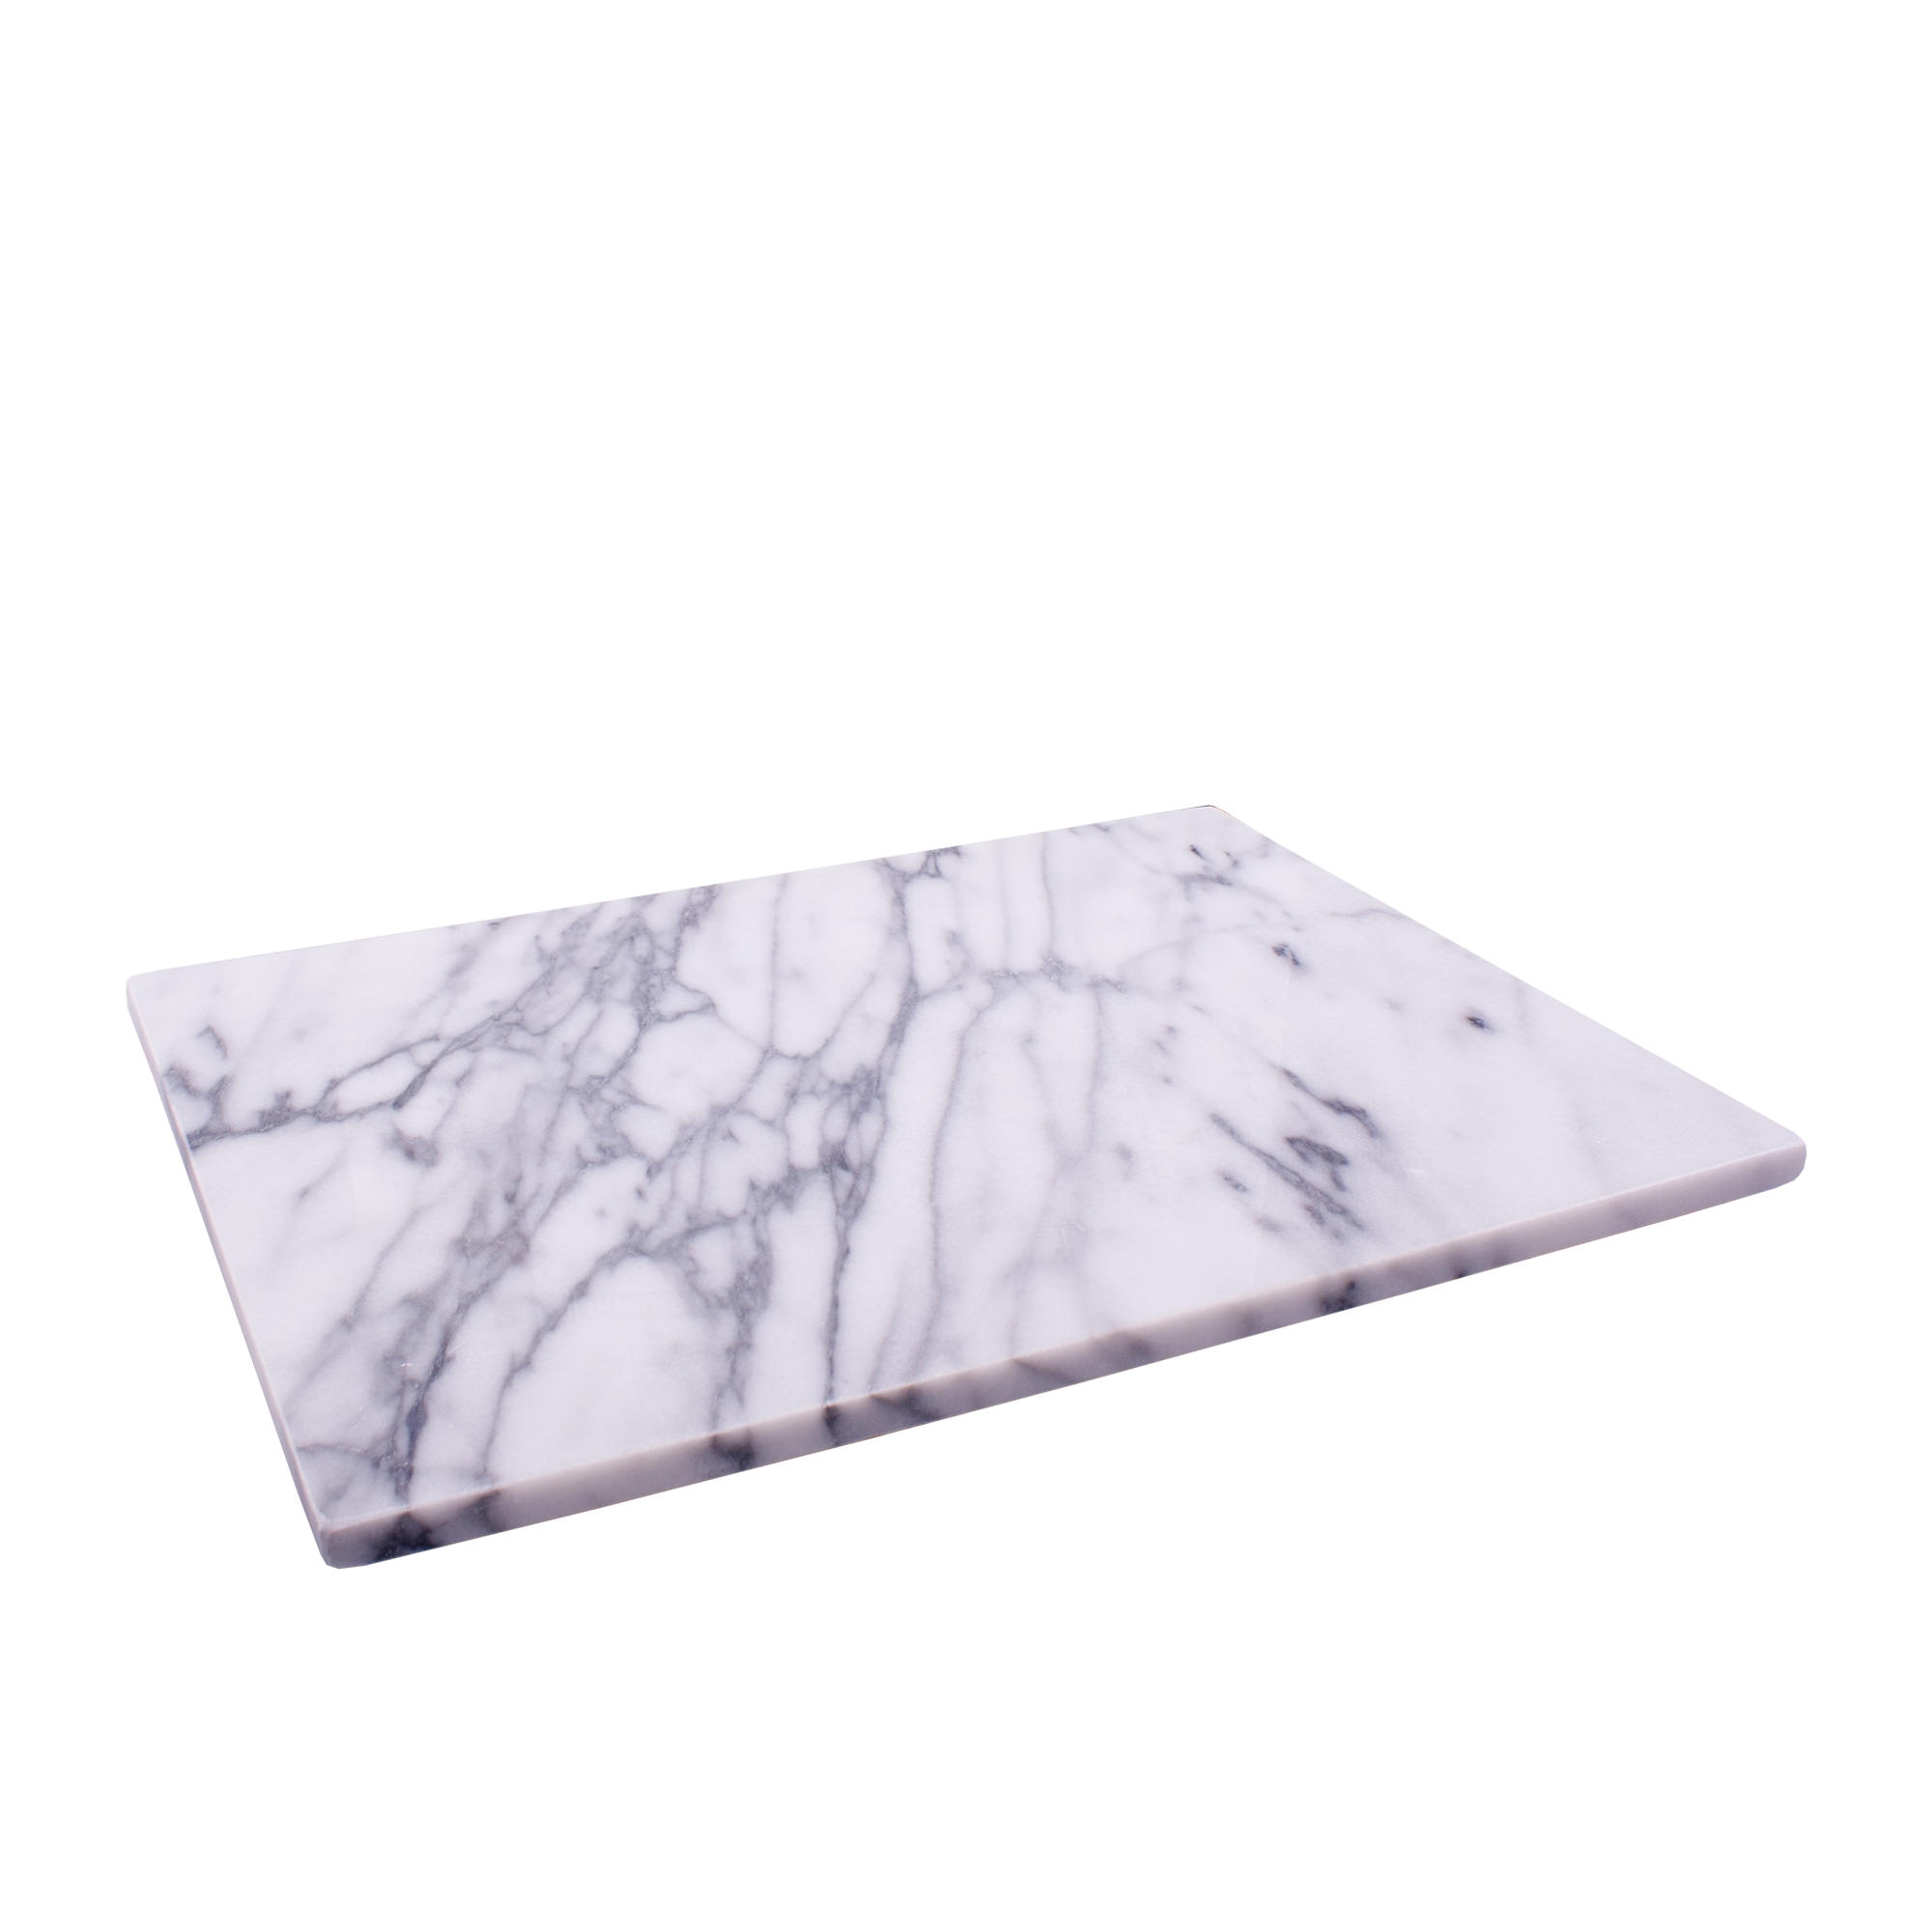 Integra Marble Pastry Board 40x30cm Grey Image 1